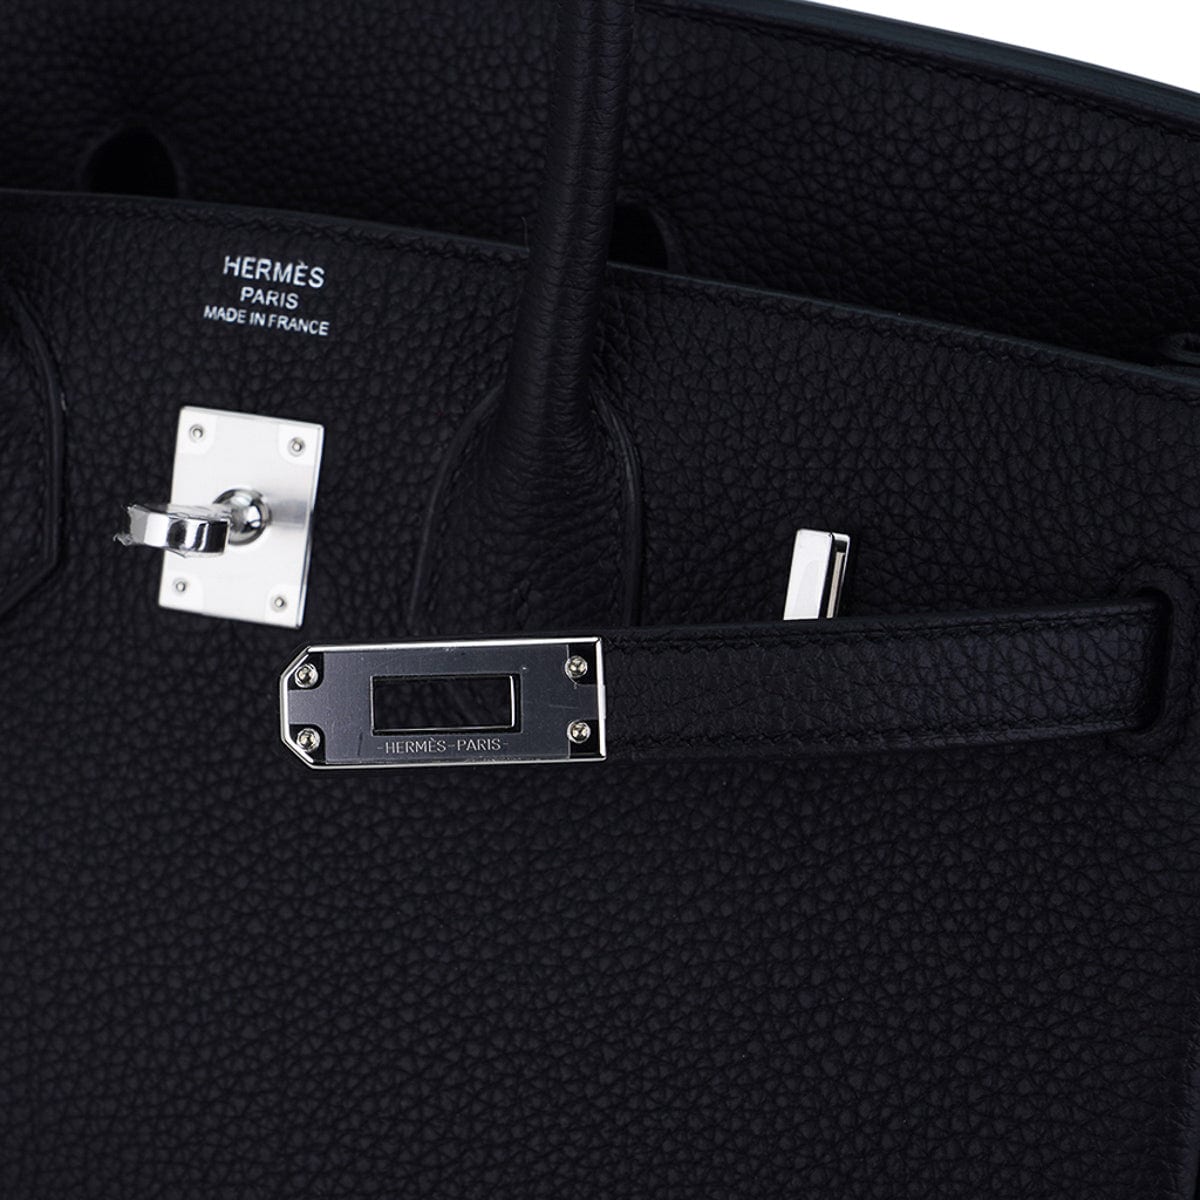 Hermès Birkin 25 Capucine Togo Palladium Hardware – ZAK BAGS